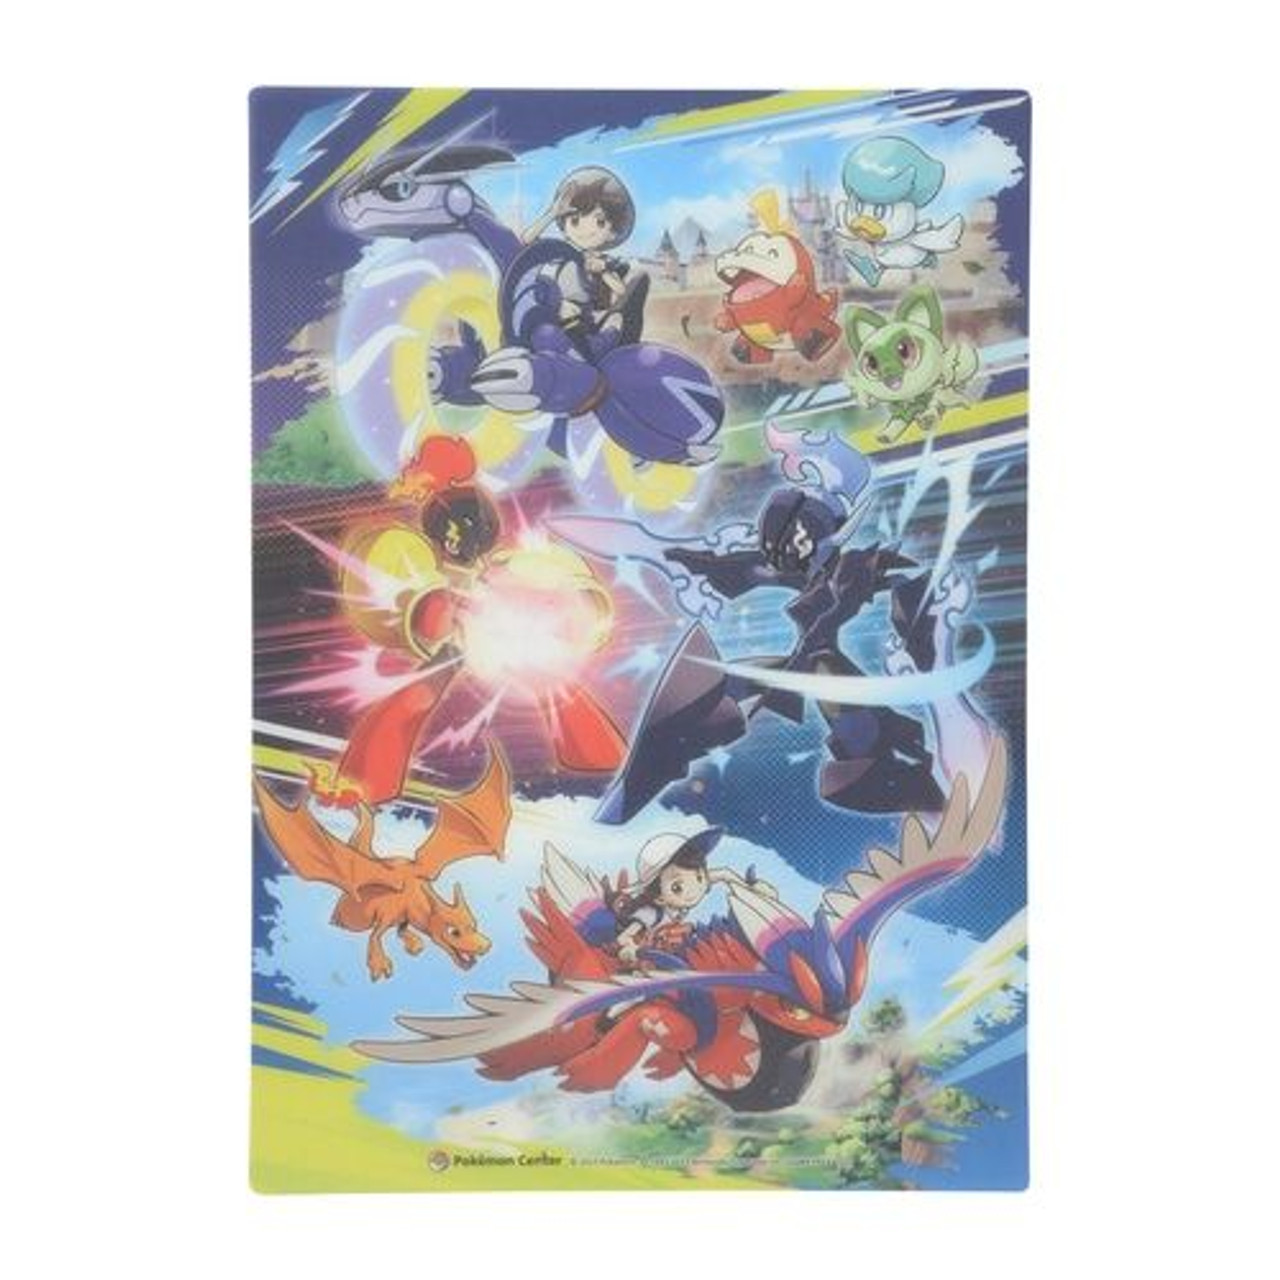 Original Pokemon Anime Poster